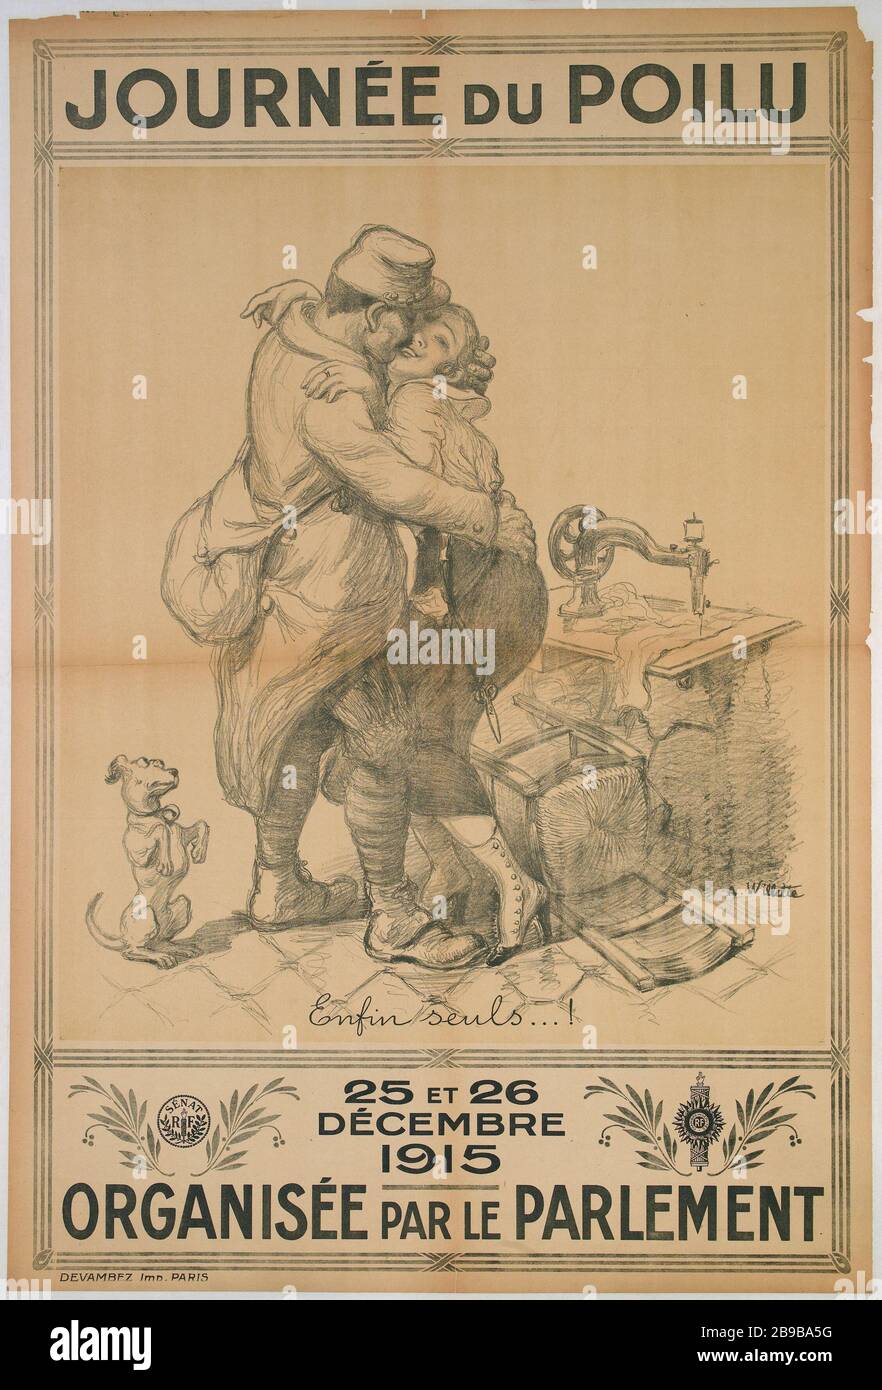 GIORNO DI ADOLPHE Willette. "Journée du Poilu". Lithographie, 1915. Parigi, musée Carnavalet. Foto Stock